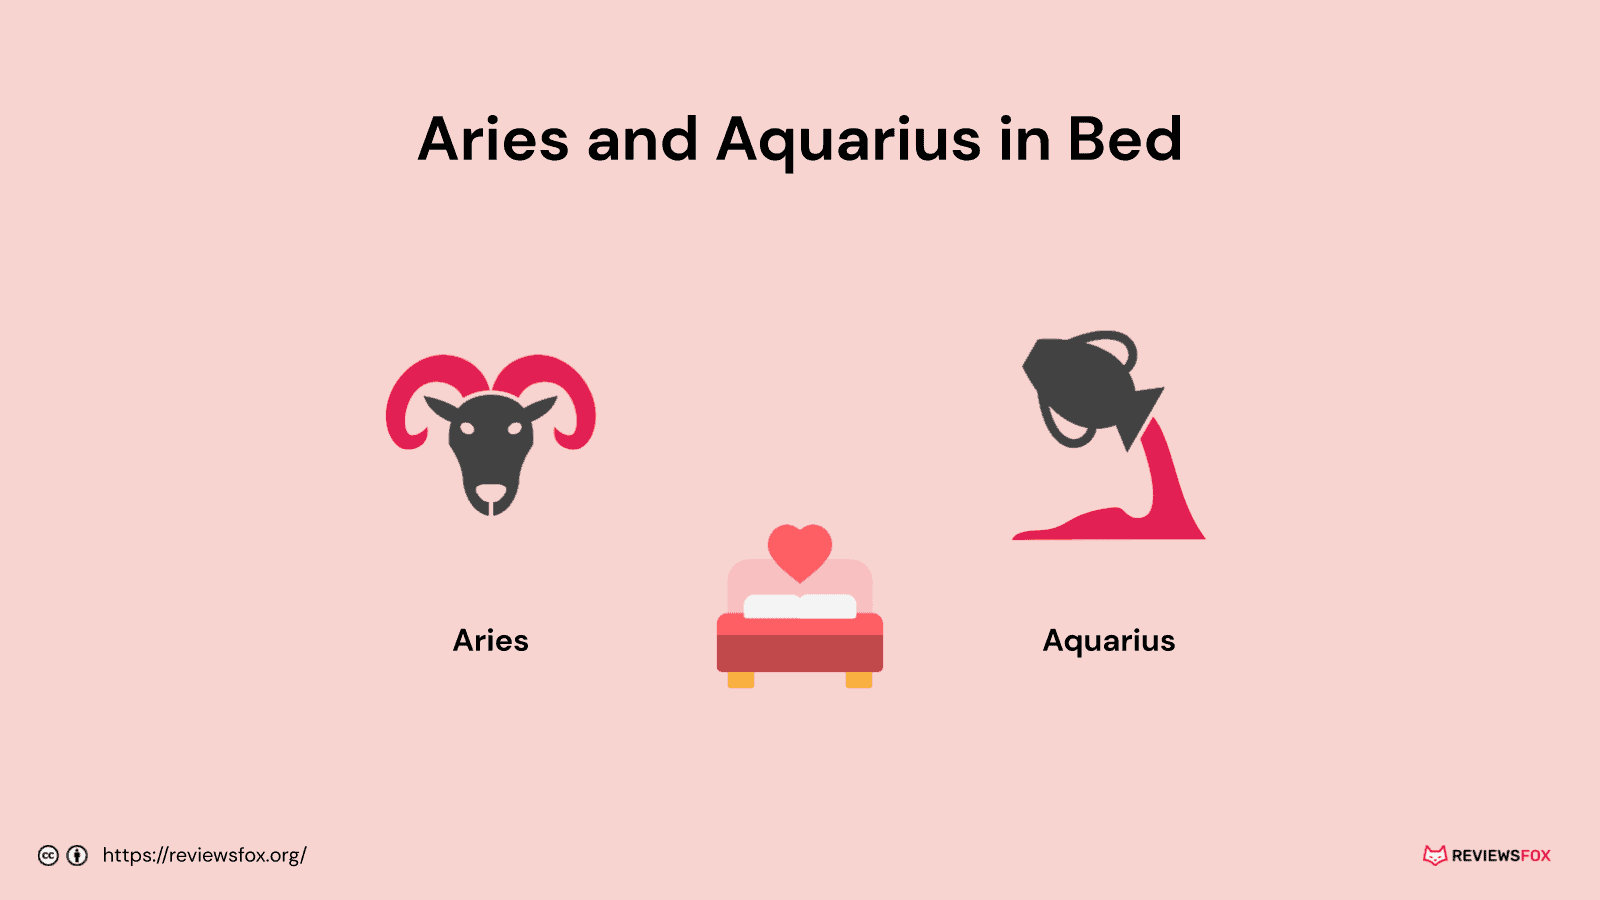 Aries and Aquarius in bed